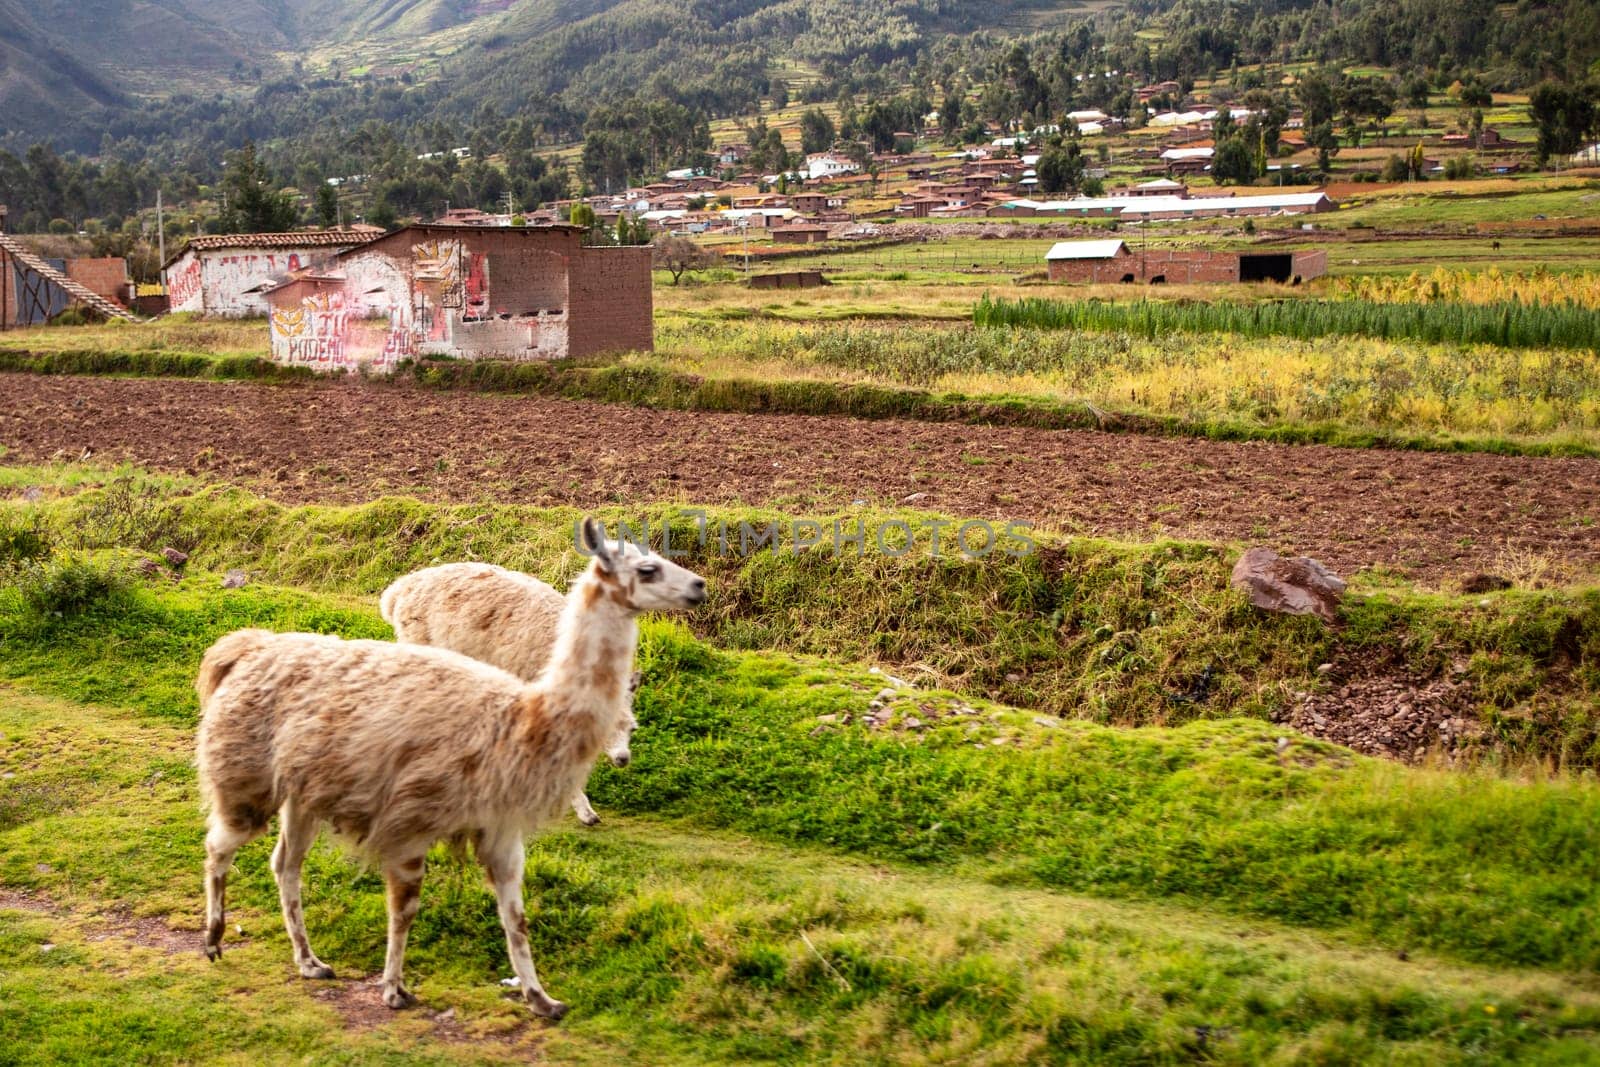 Two Alpacas Grazing in a Peruvian town